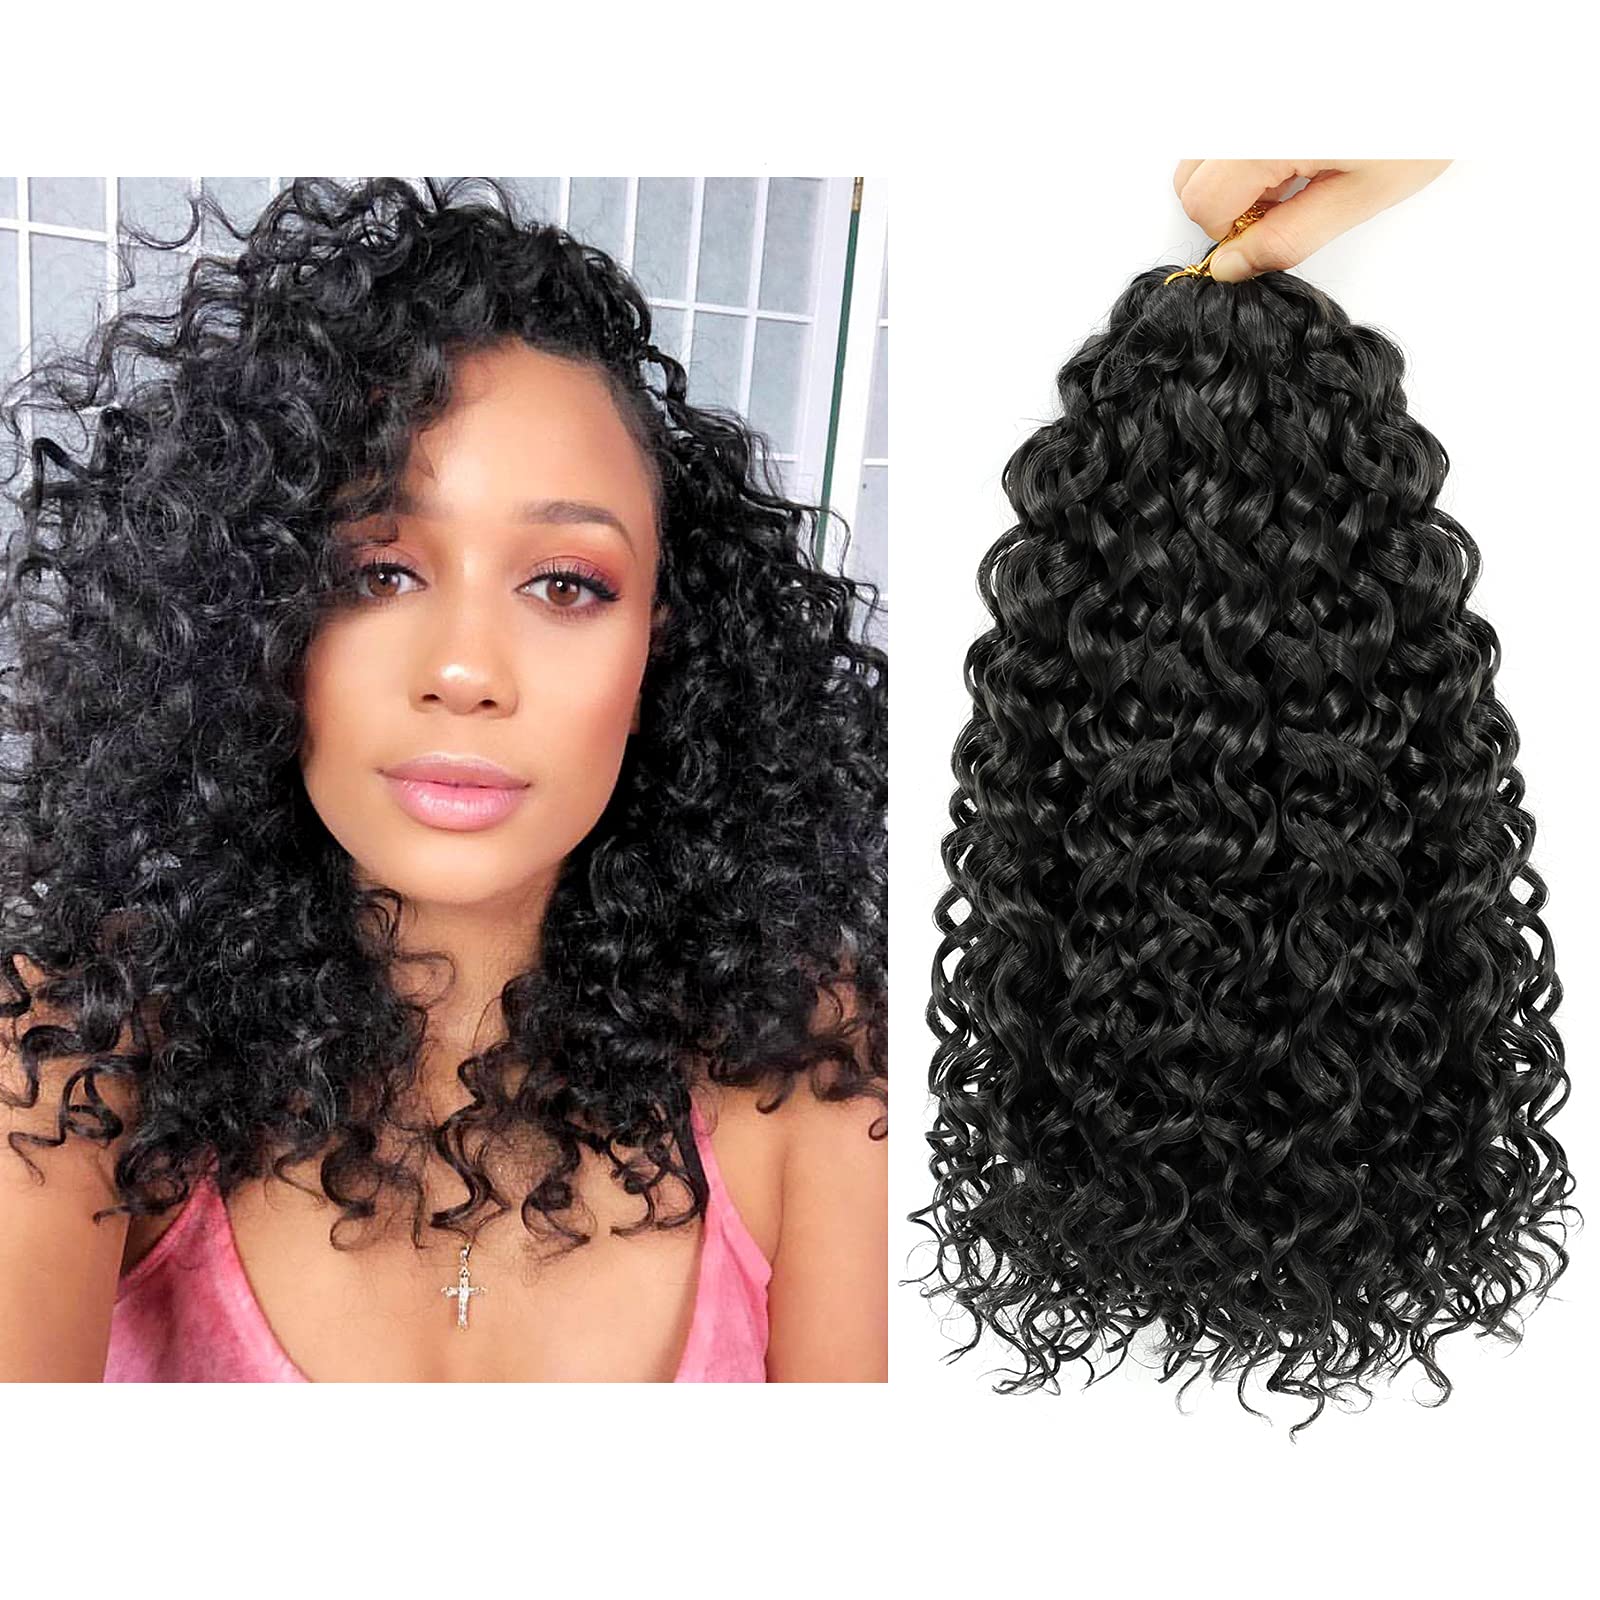 Gogo Curl 14 Inch 8 Packs Curly Crochet Hair for Black Women Color 2 Wavy  Beach Curls Crochet Hair Water Wave Go Go Crotchet Hair Synthetic Curly